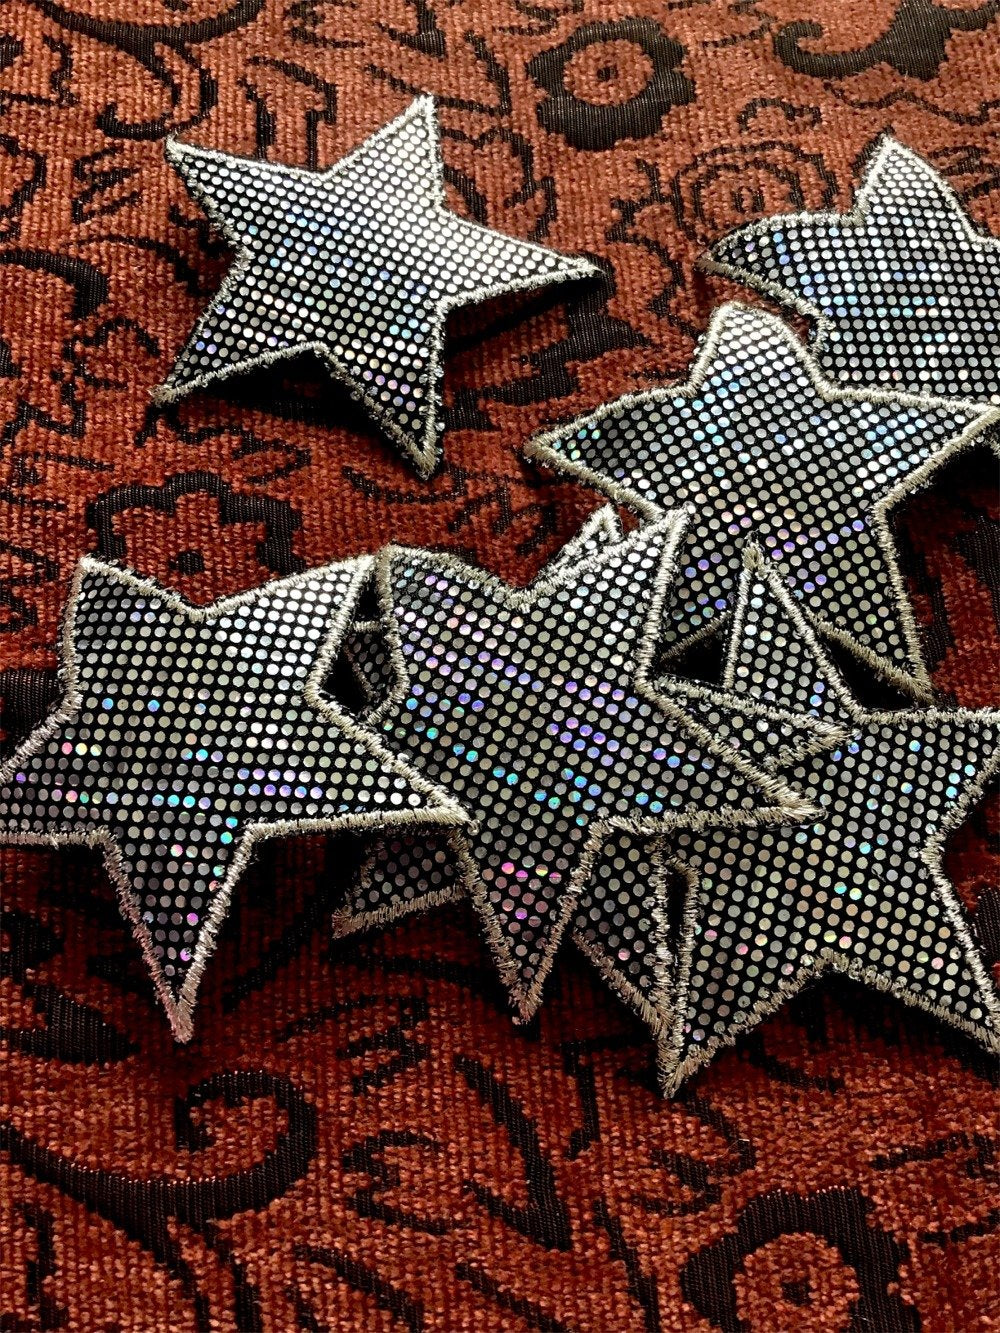 Metallic Silver Star Vintage Iron-on Applique Patch #5002